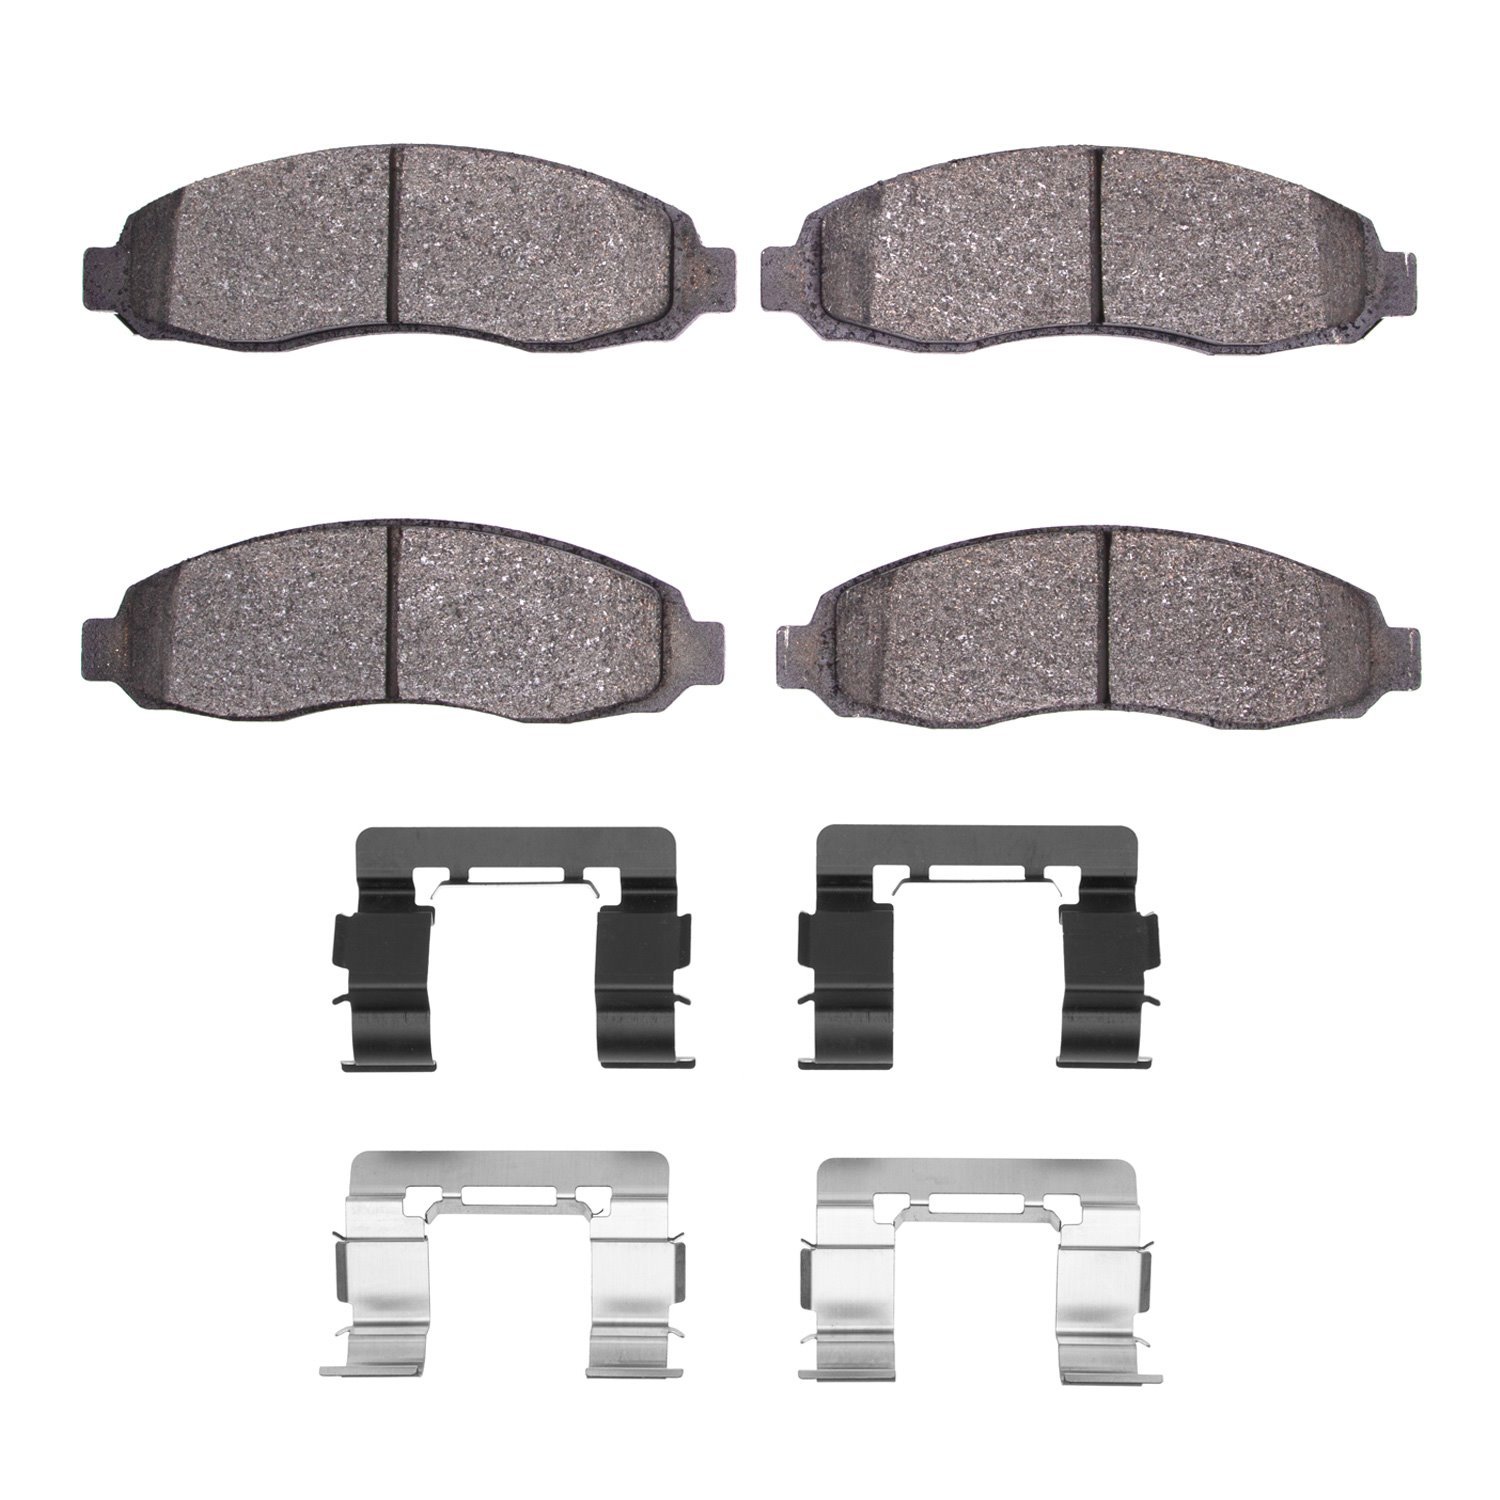 1310-0962-01 3000-Series Ceramic Brake Pads & Hardware Kit, 2003-2004 Mopar, Position: Front